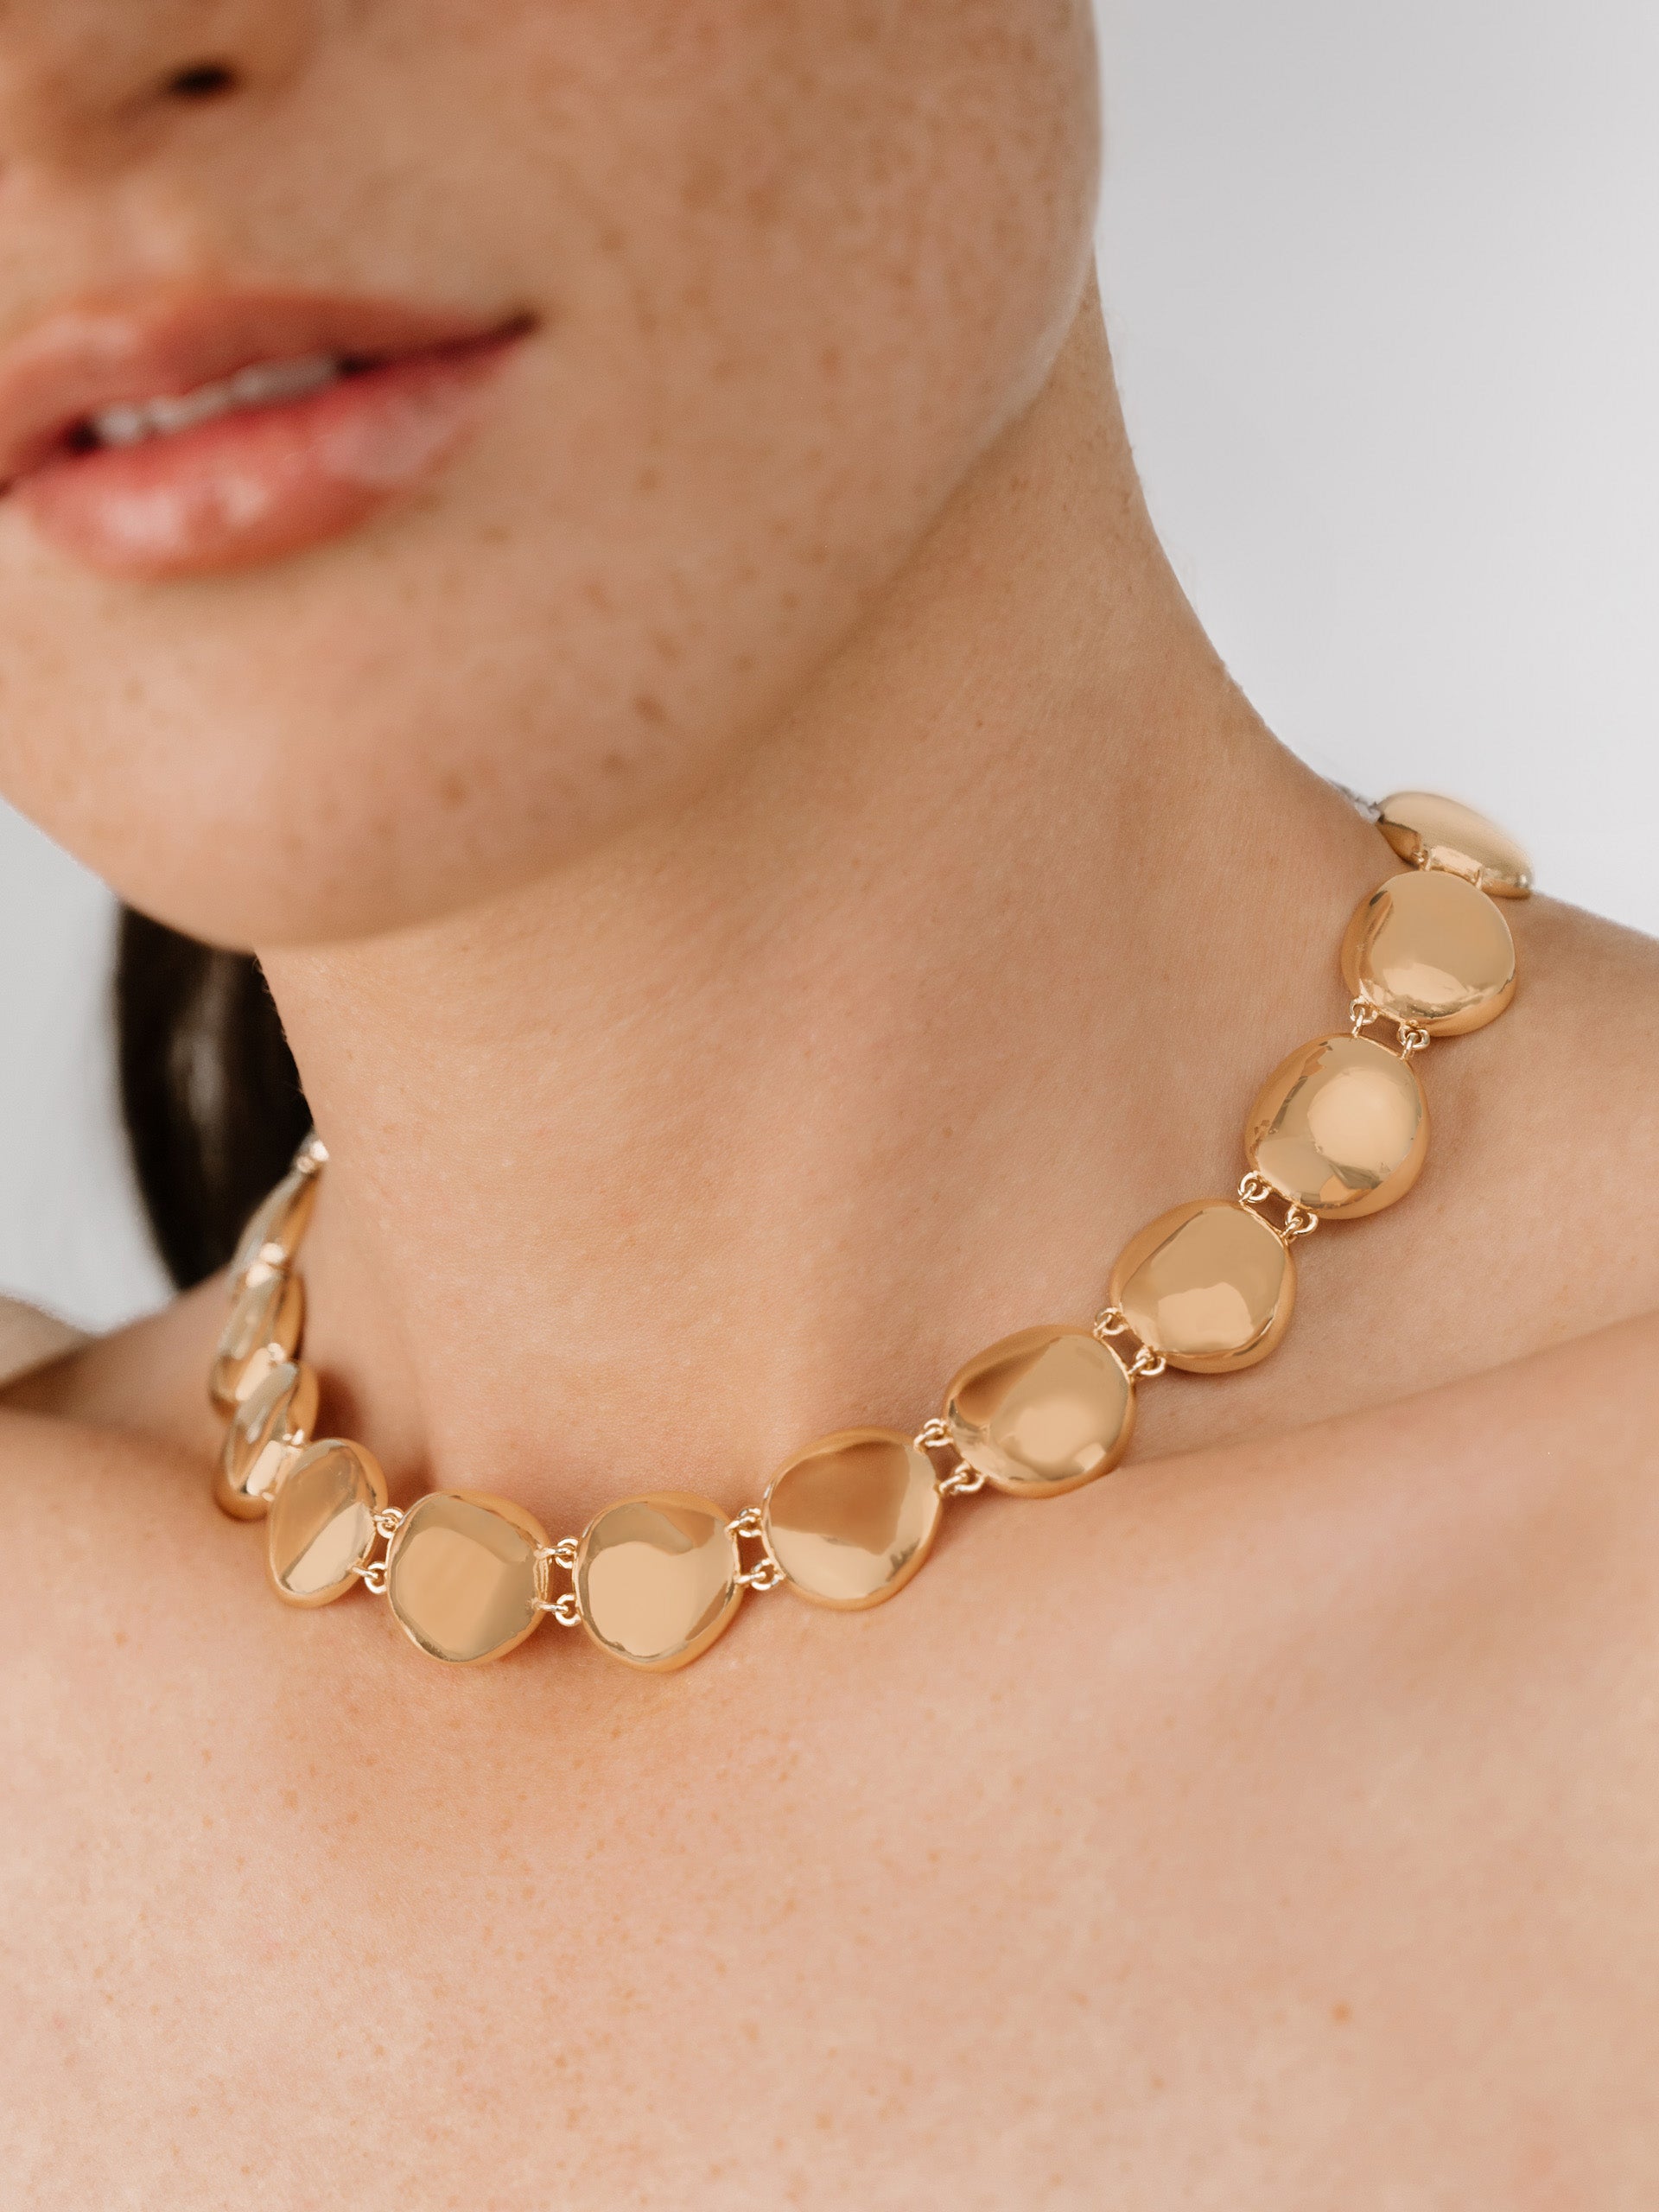 Polished Pebble Choker Necklace on model